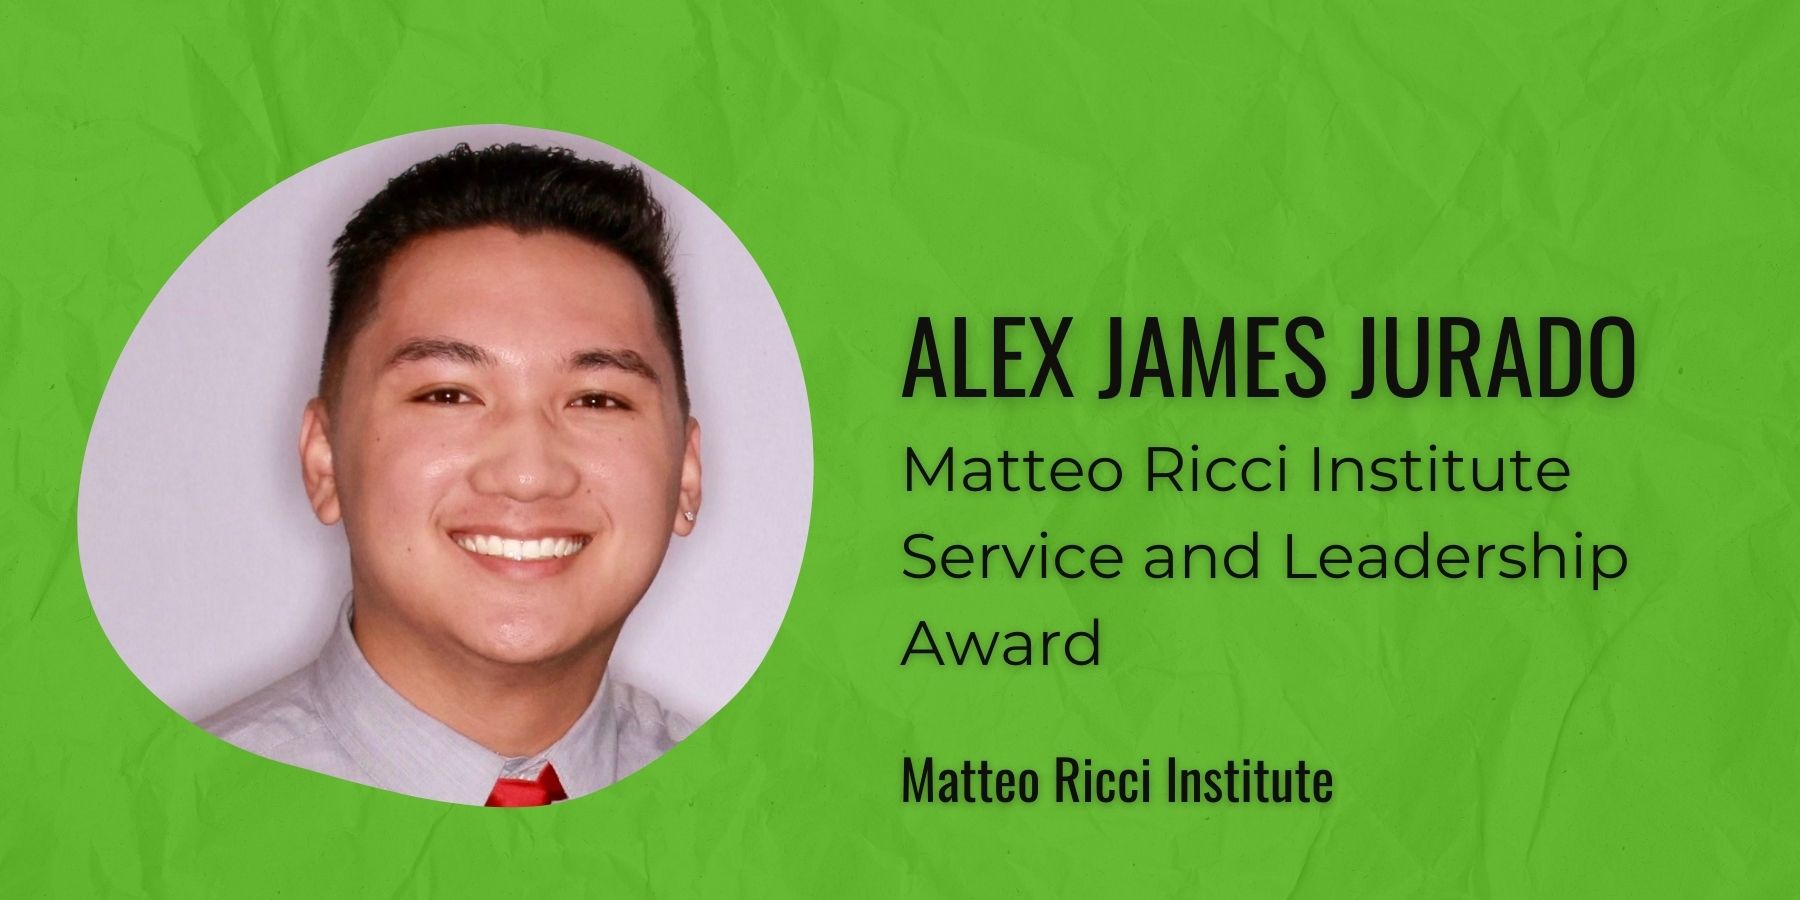 Image Alex James Jurado text Matteo Ricci Institute Service Leadership Award Matteo Ricci Institute